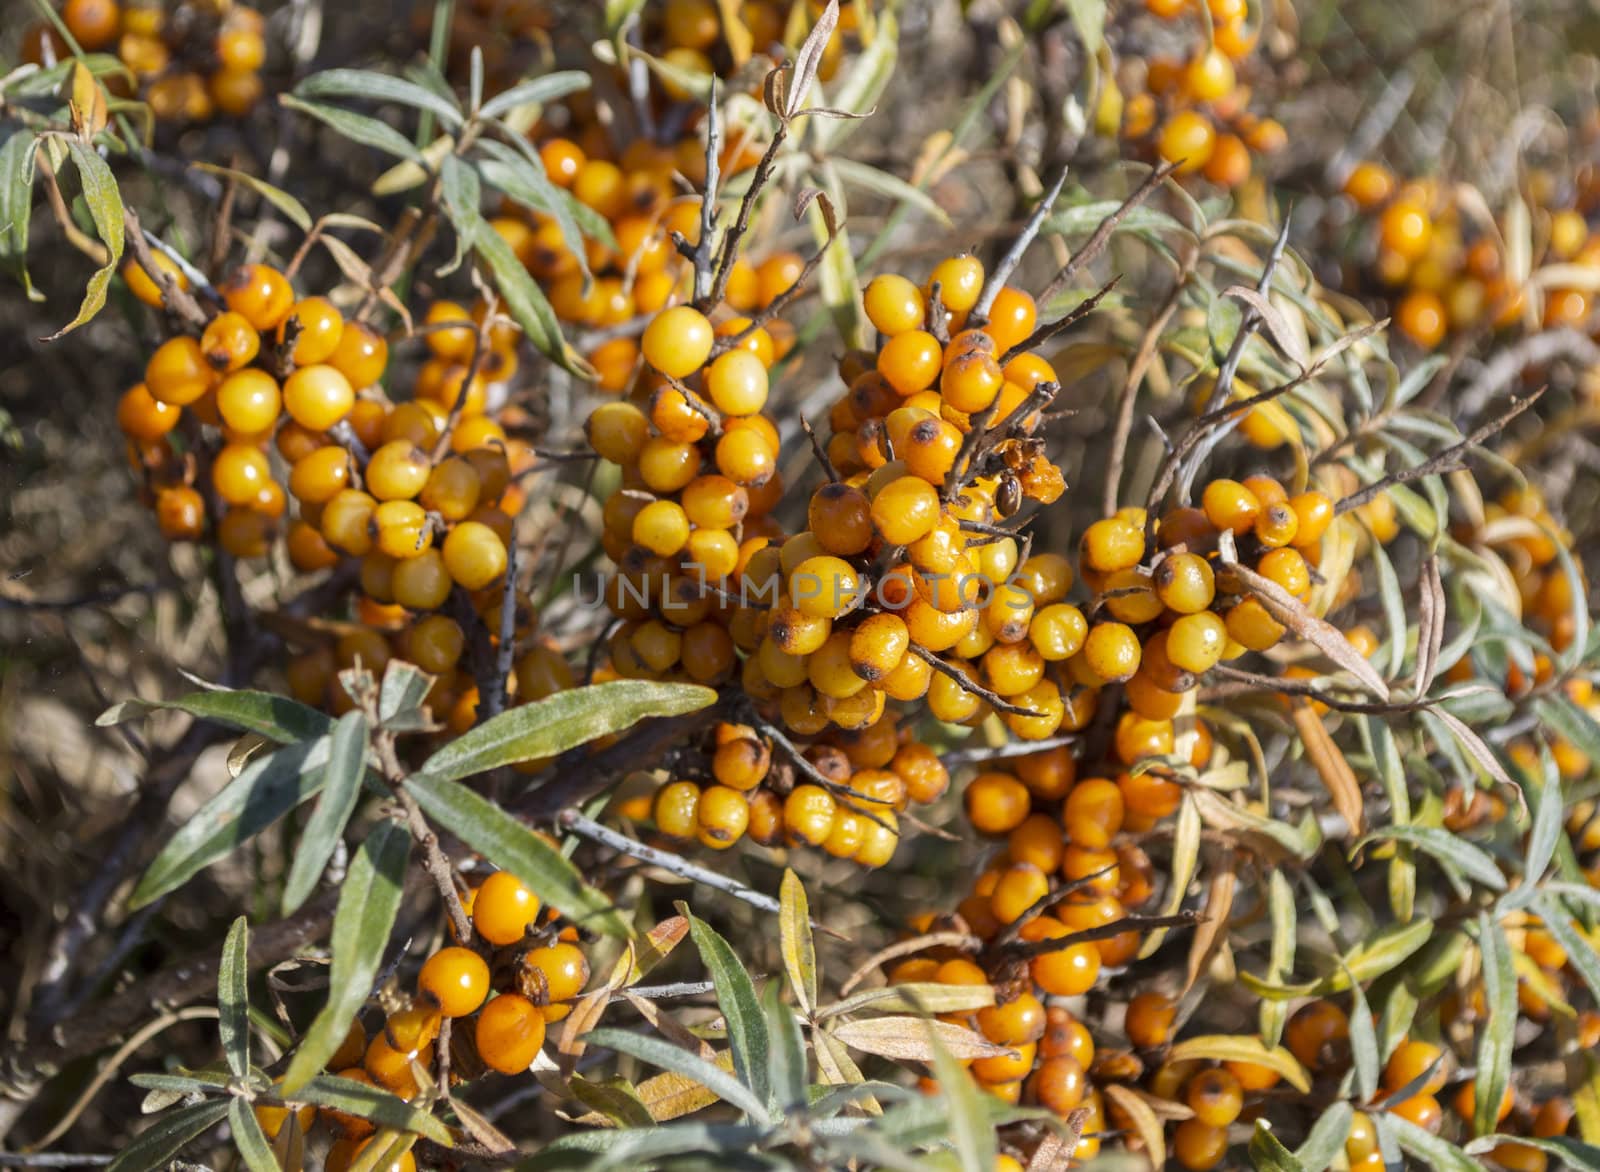  buckthorn berries  by compuinfoto